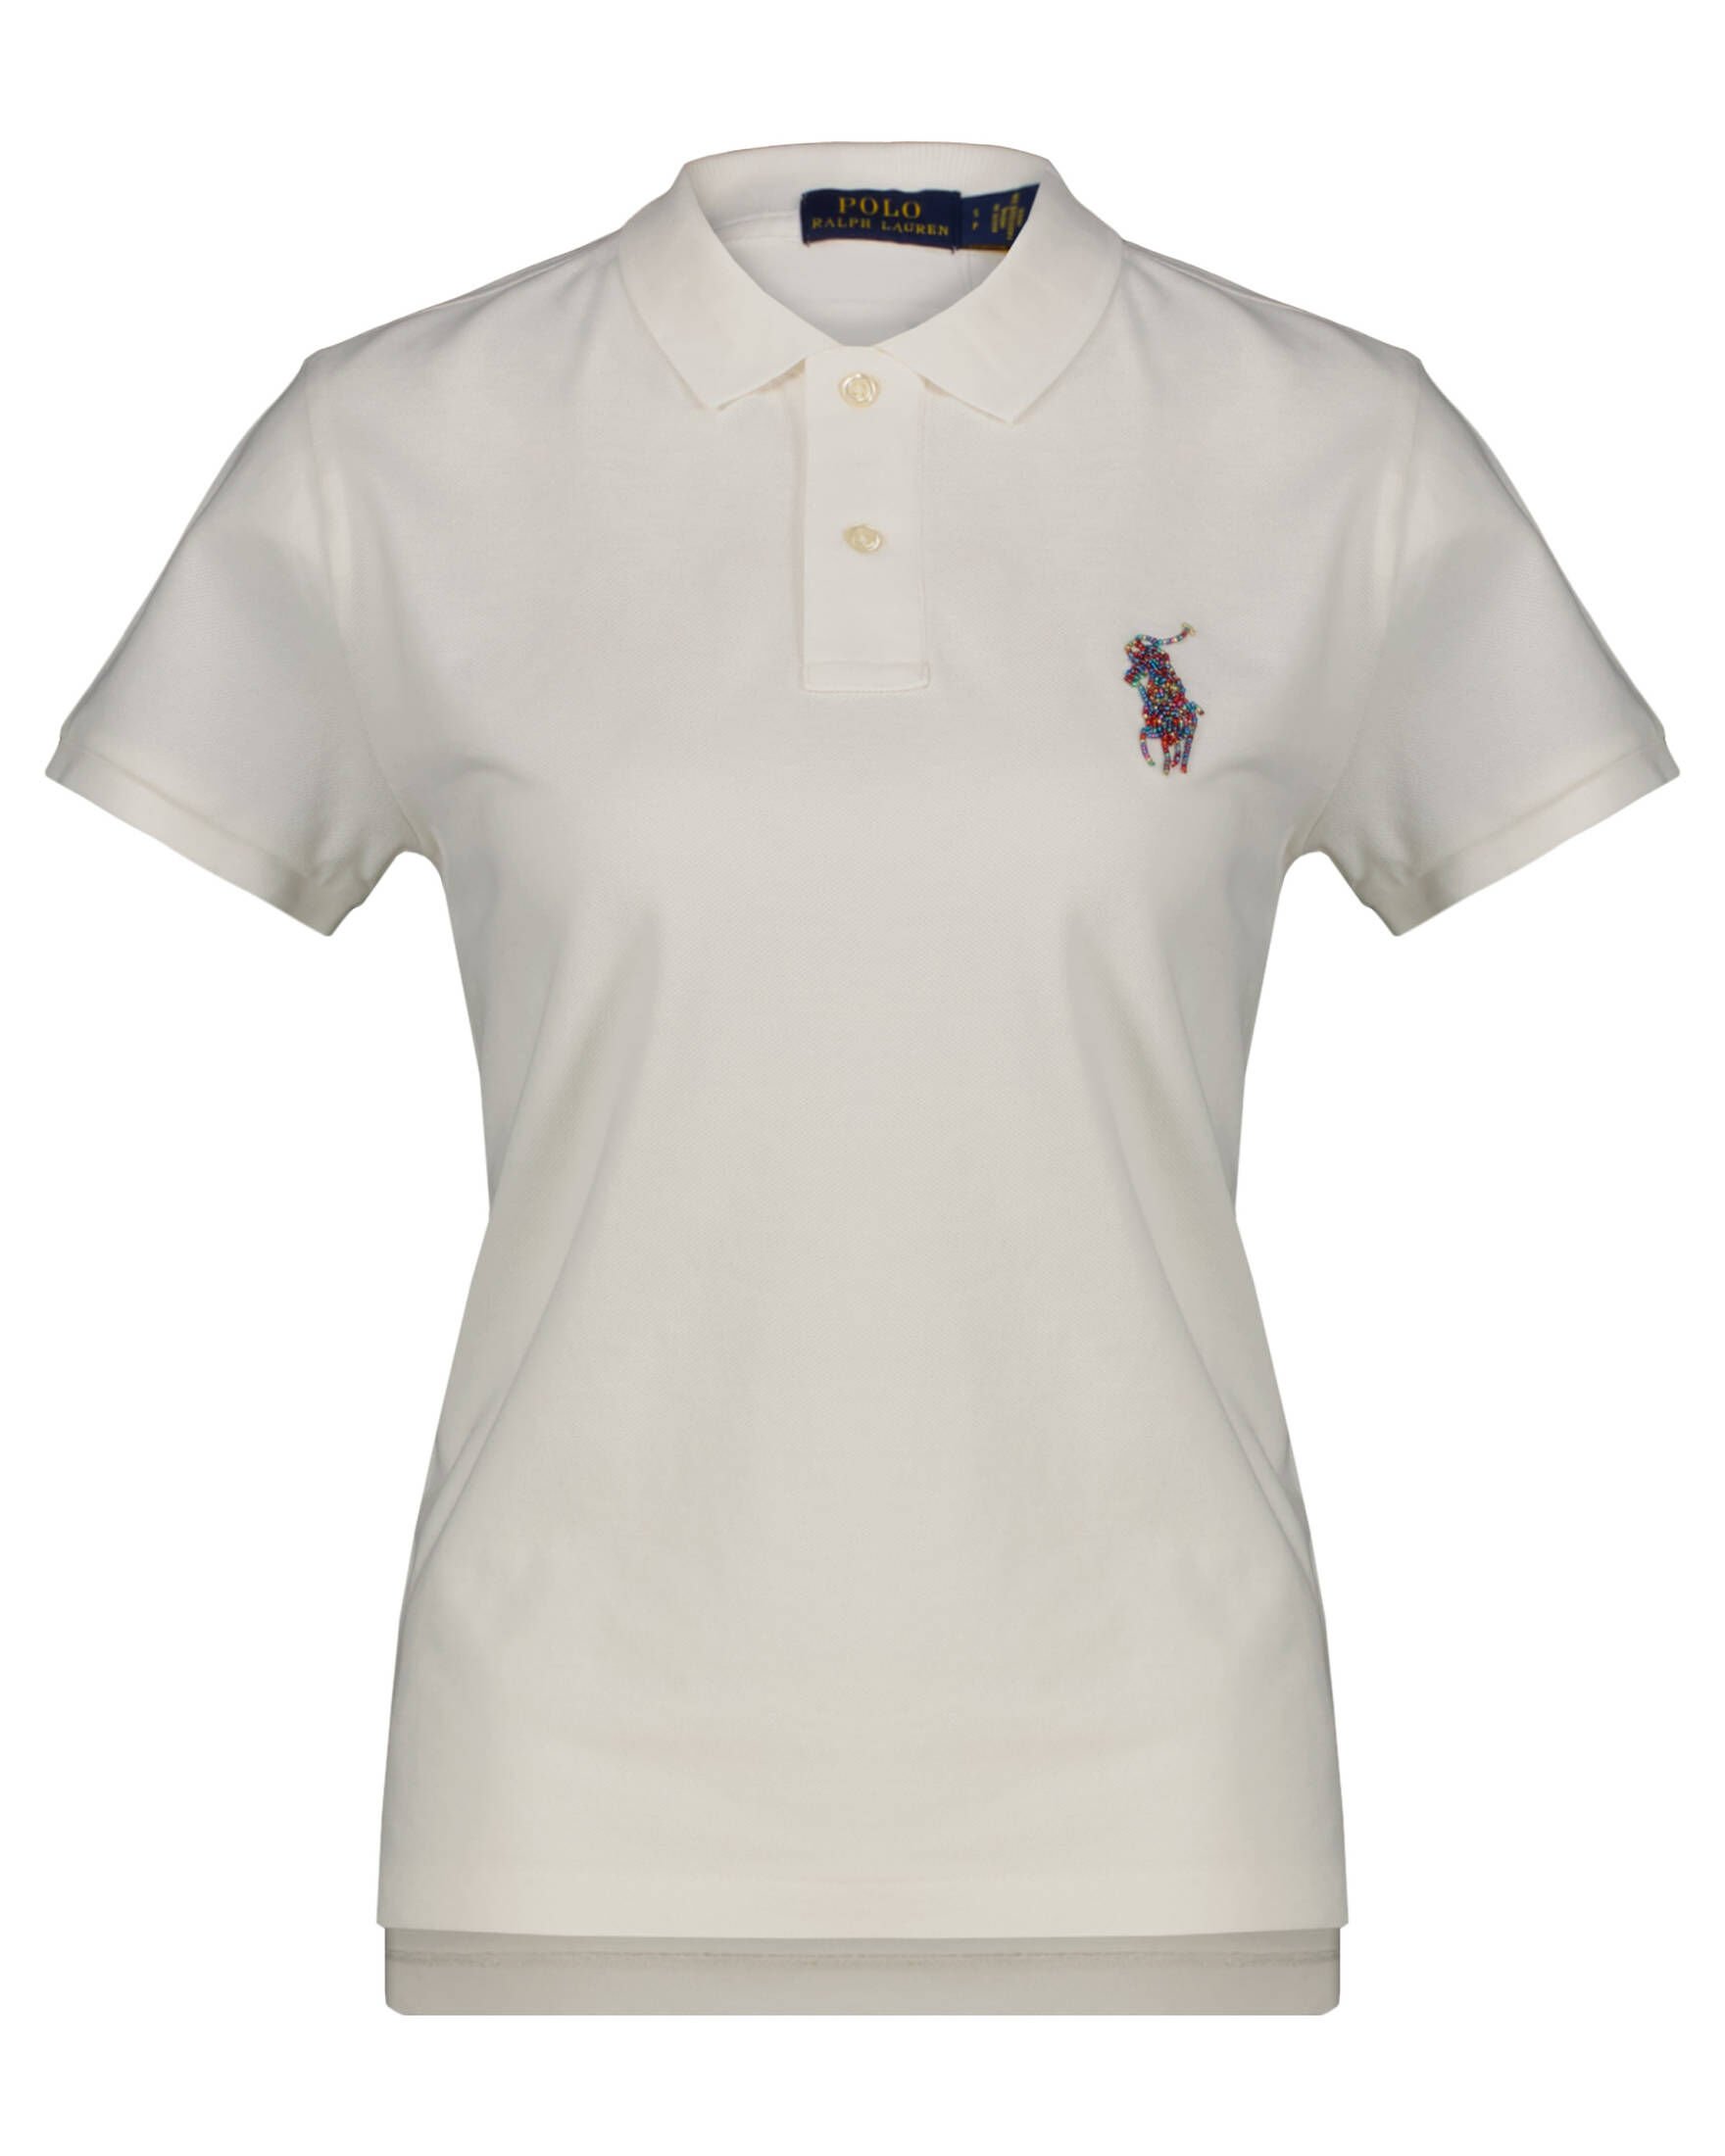 vrijheid Speciaal Proficiat Polo Ralph Lauren Damen Poloshirt kaufen | engelhorn